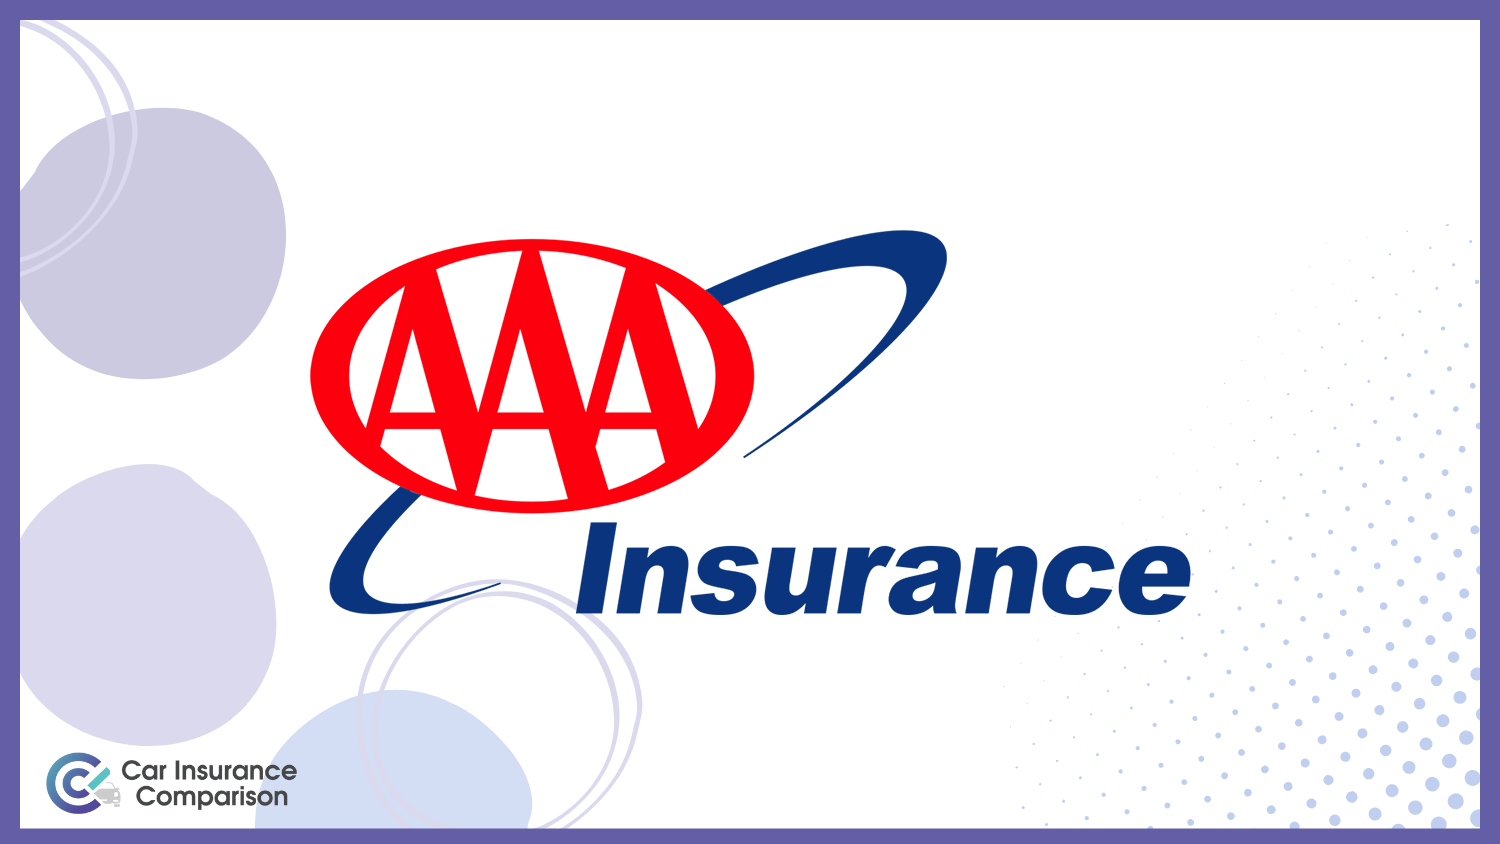 AAA: Cheap Car Insurance for a Second Car